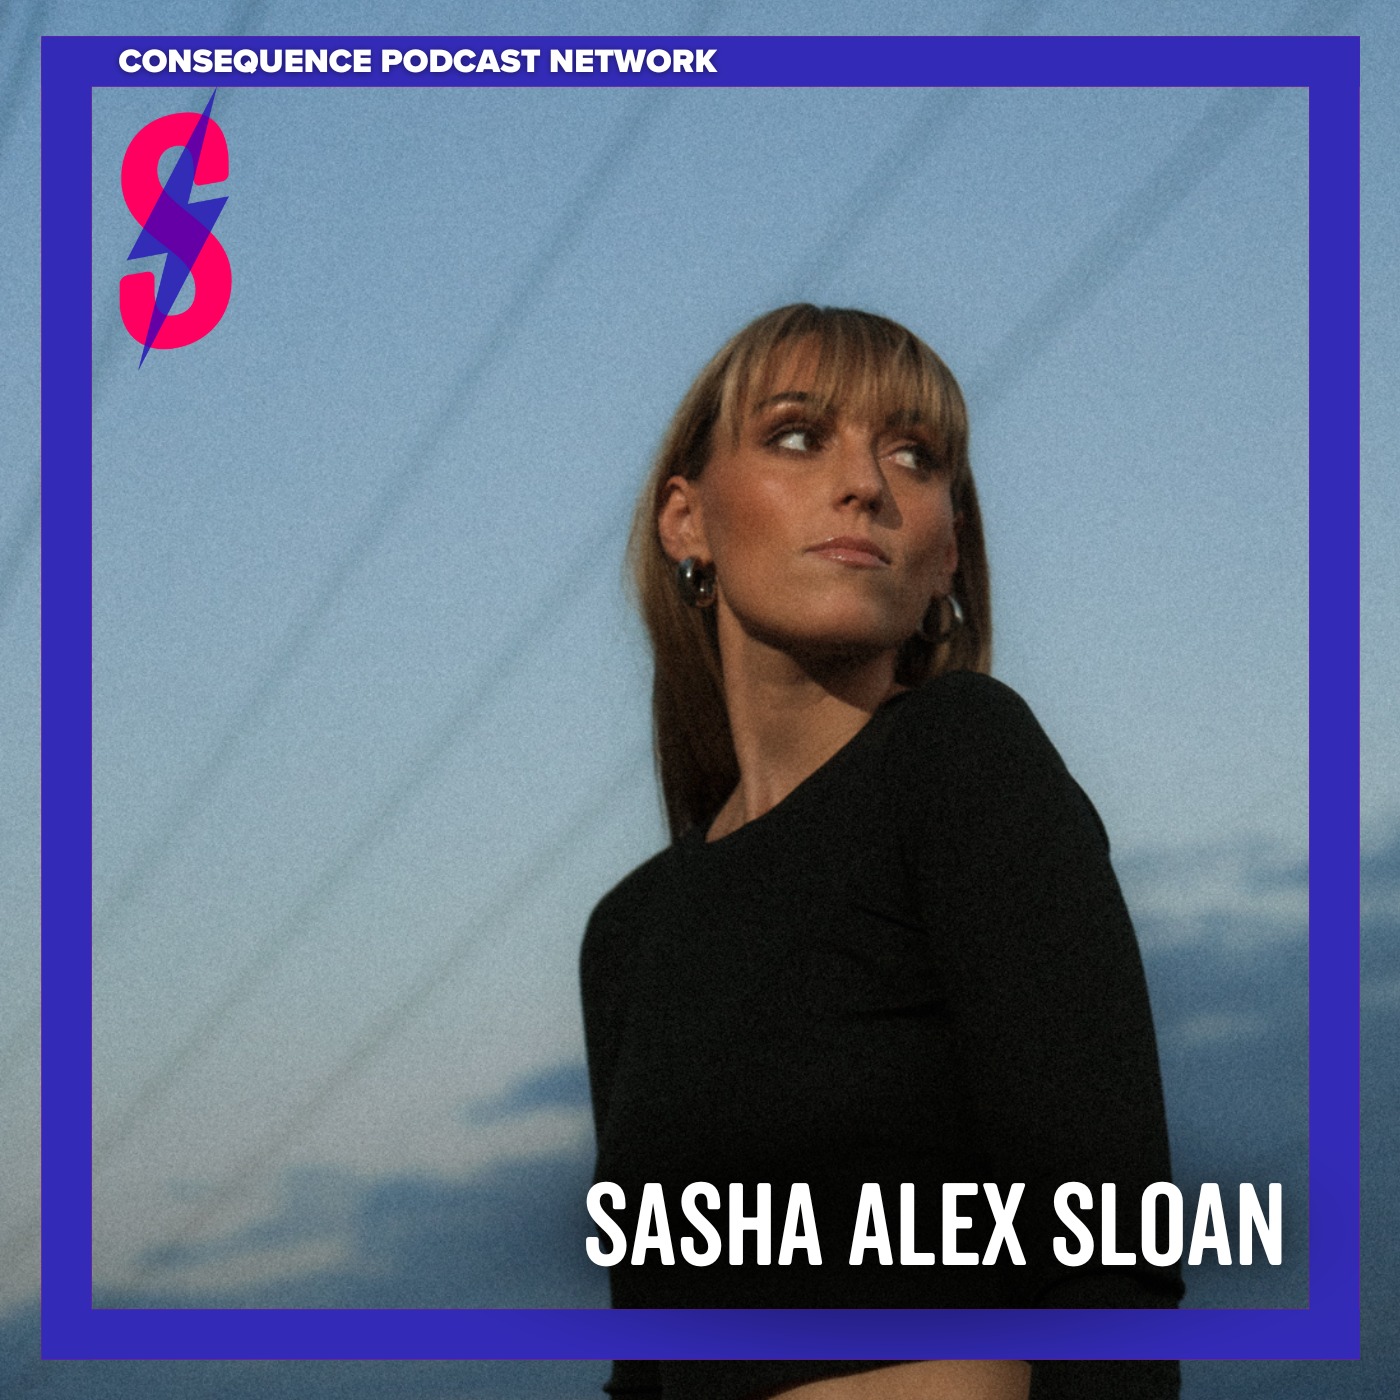 Sasha Alex Sloan's Spark Is Fleishman Is In Trouble